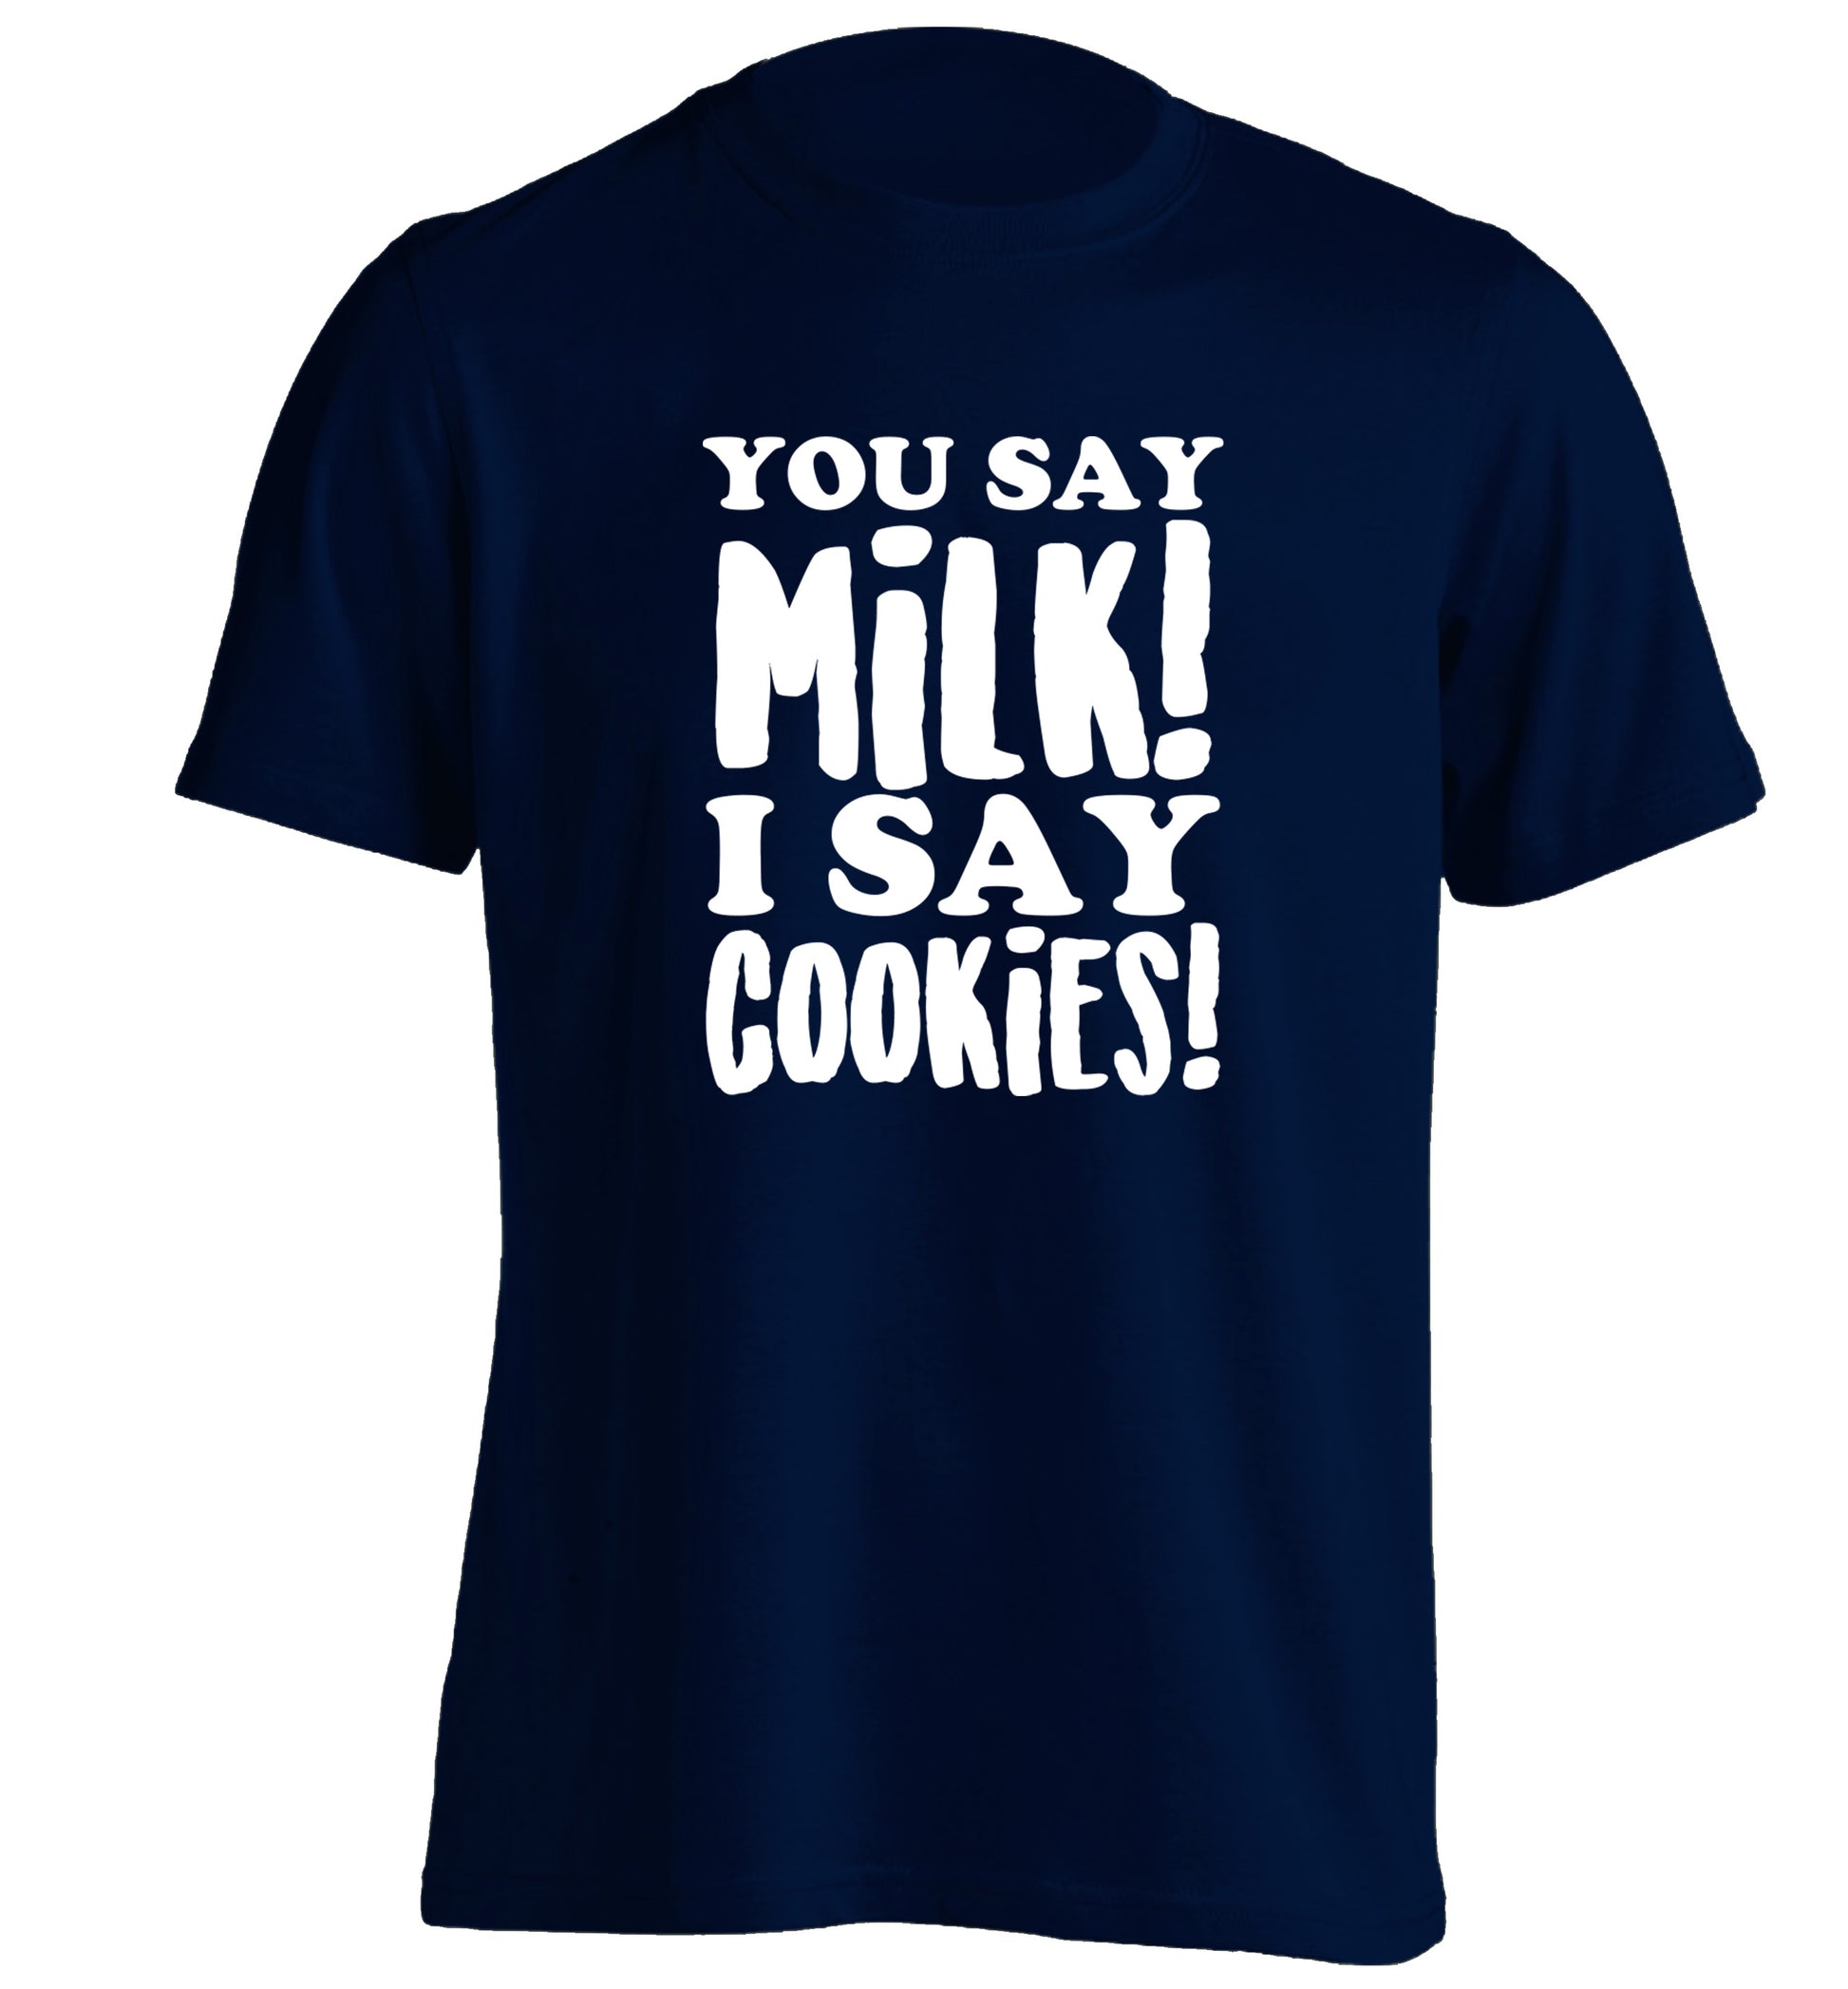 You say milk I say cookies! adults unisex navy Tshirt 2XL